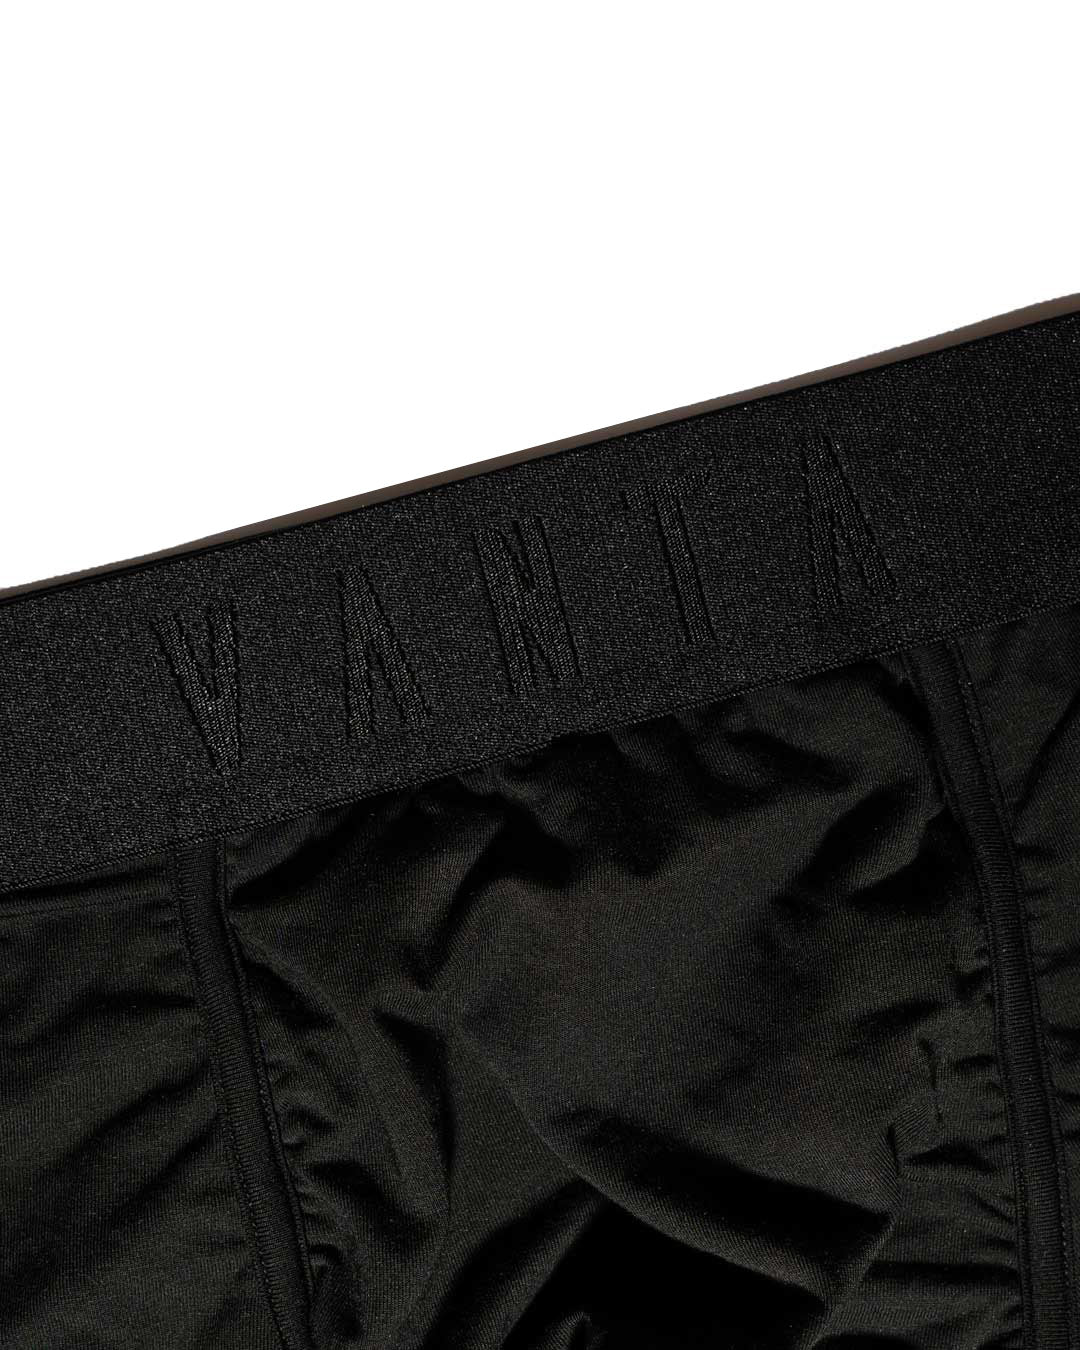 VANTA Underwear | Kanga Pouch Tech | Never Adjust Again – NZ VANTA